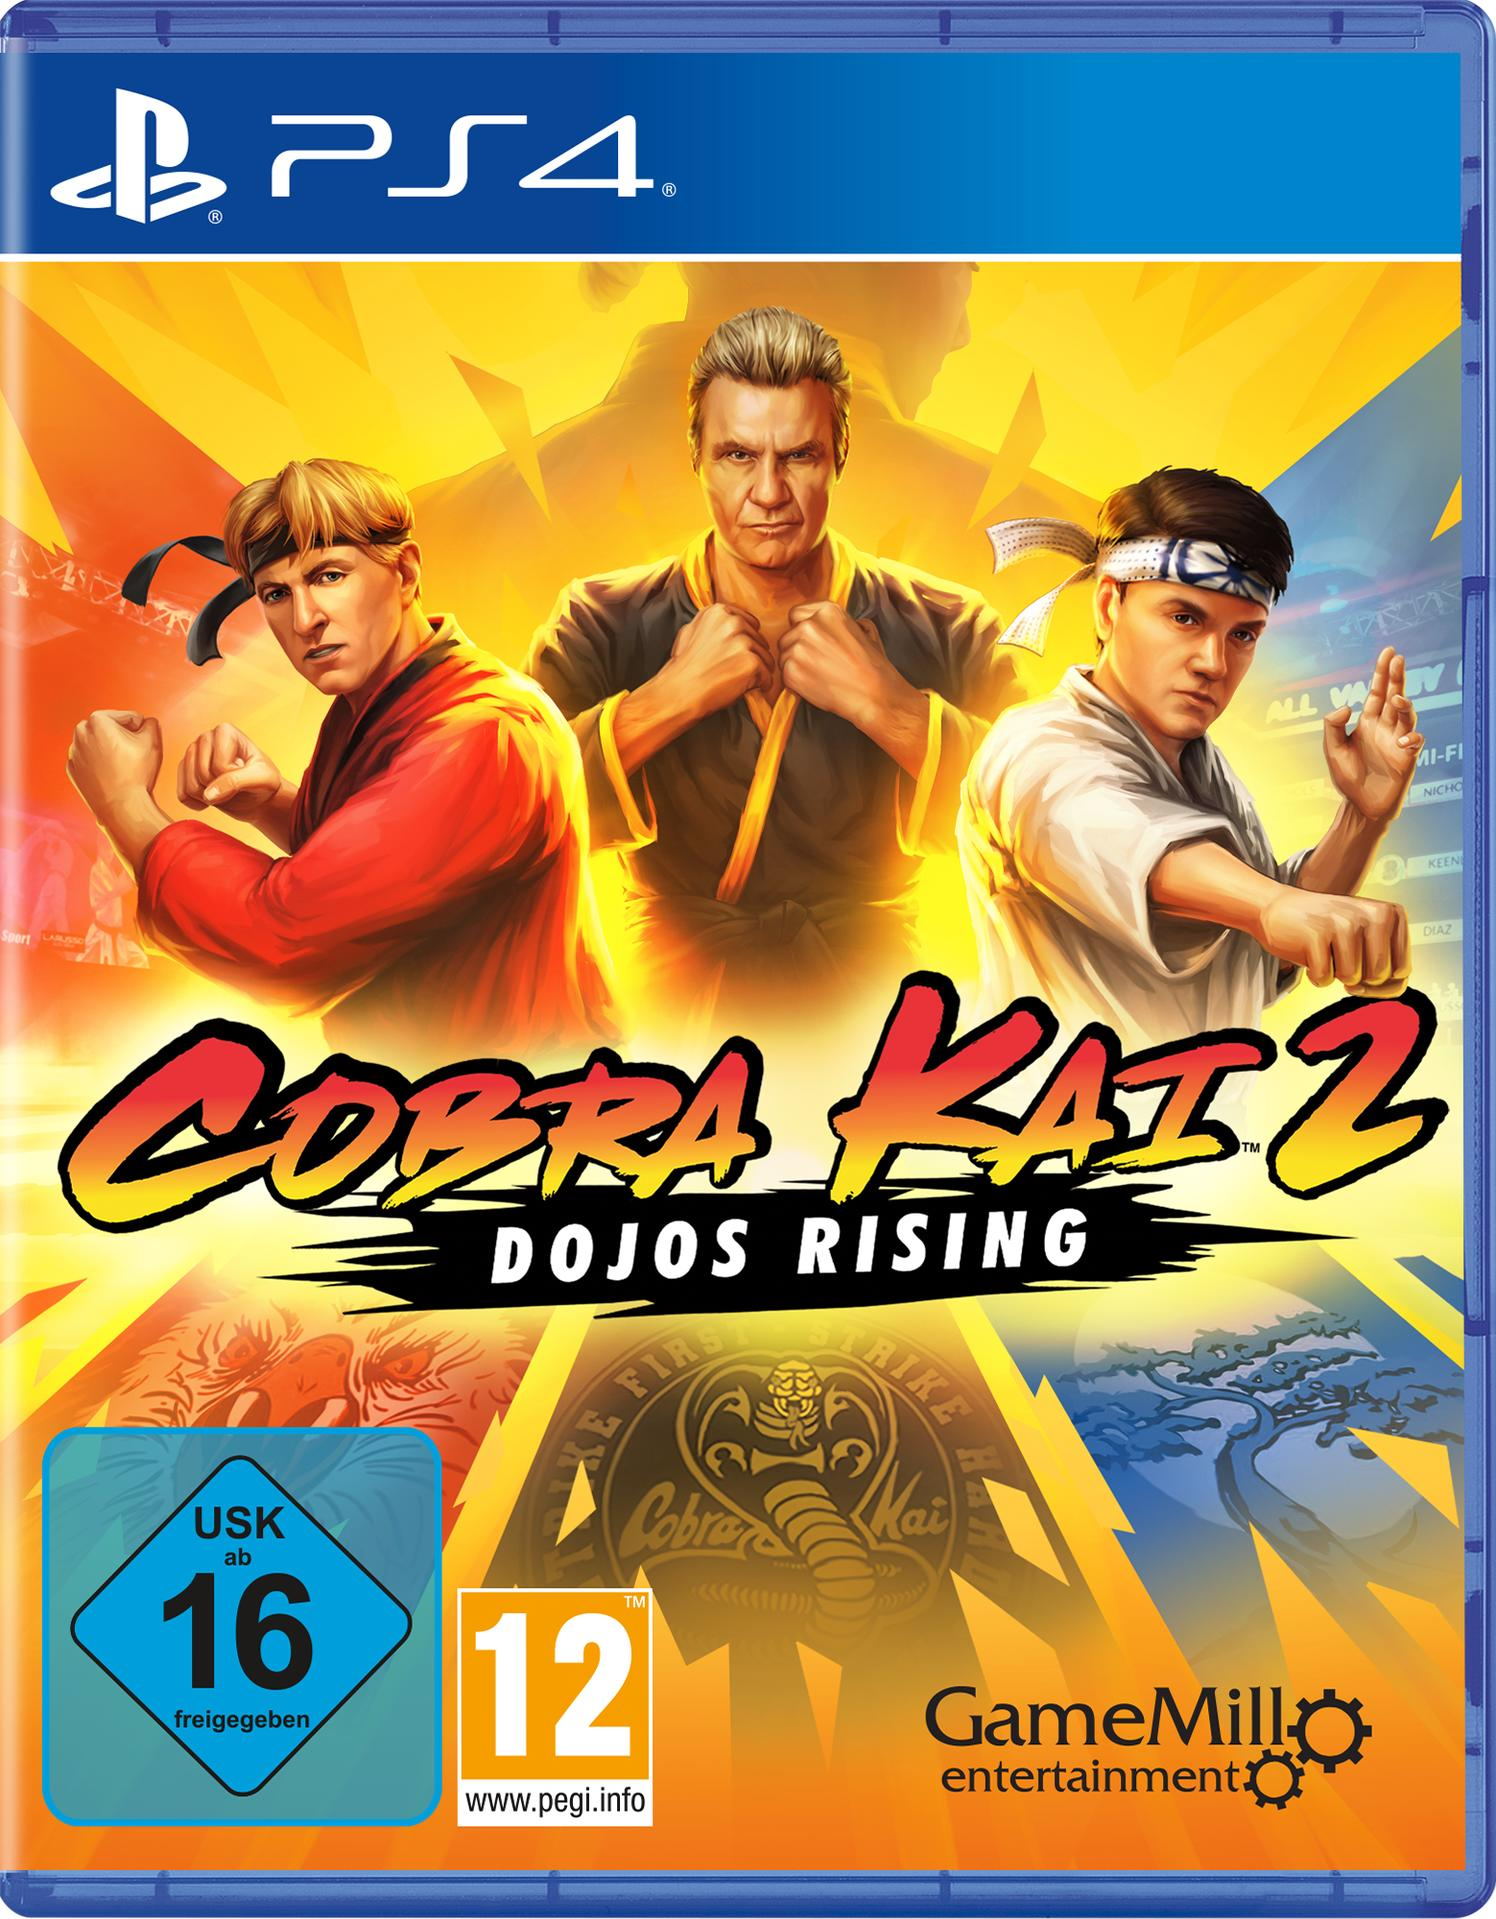 Cobra Kai 2: [PlayStation 4] - Rising Dojos